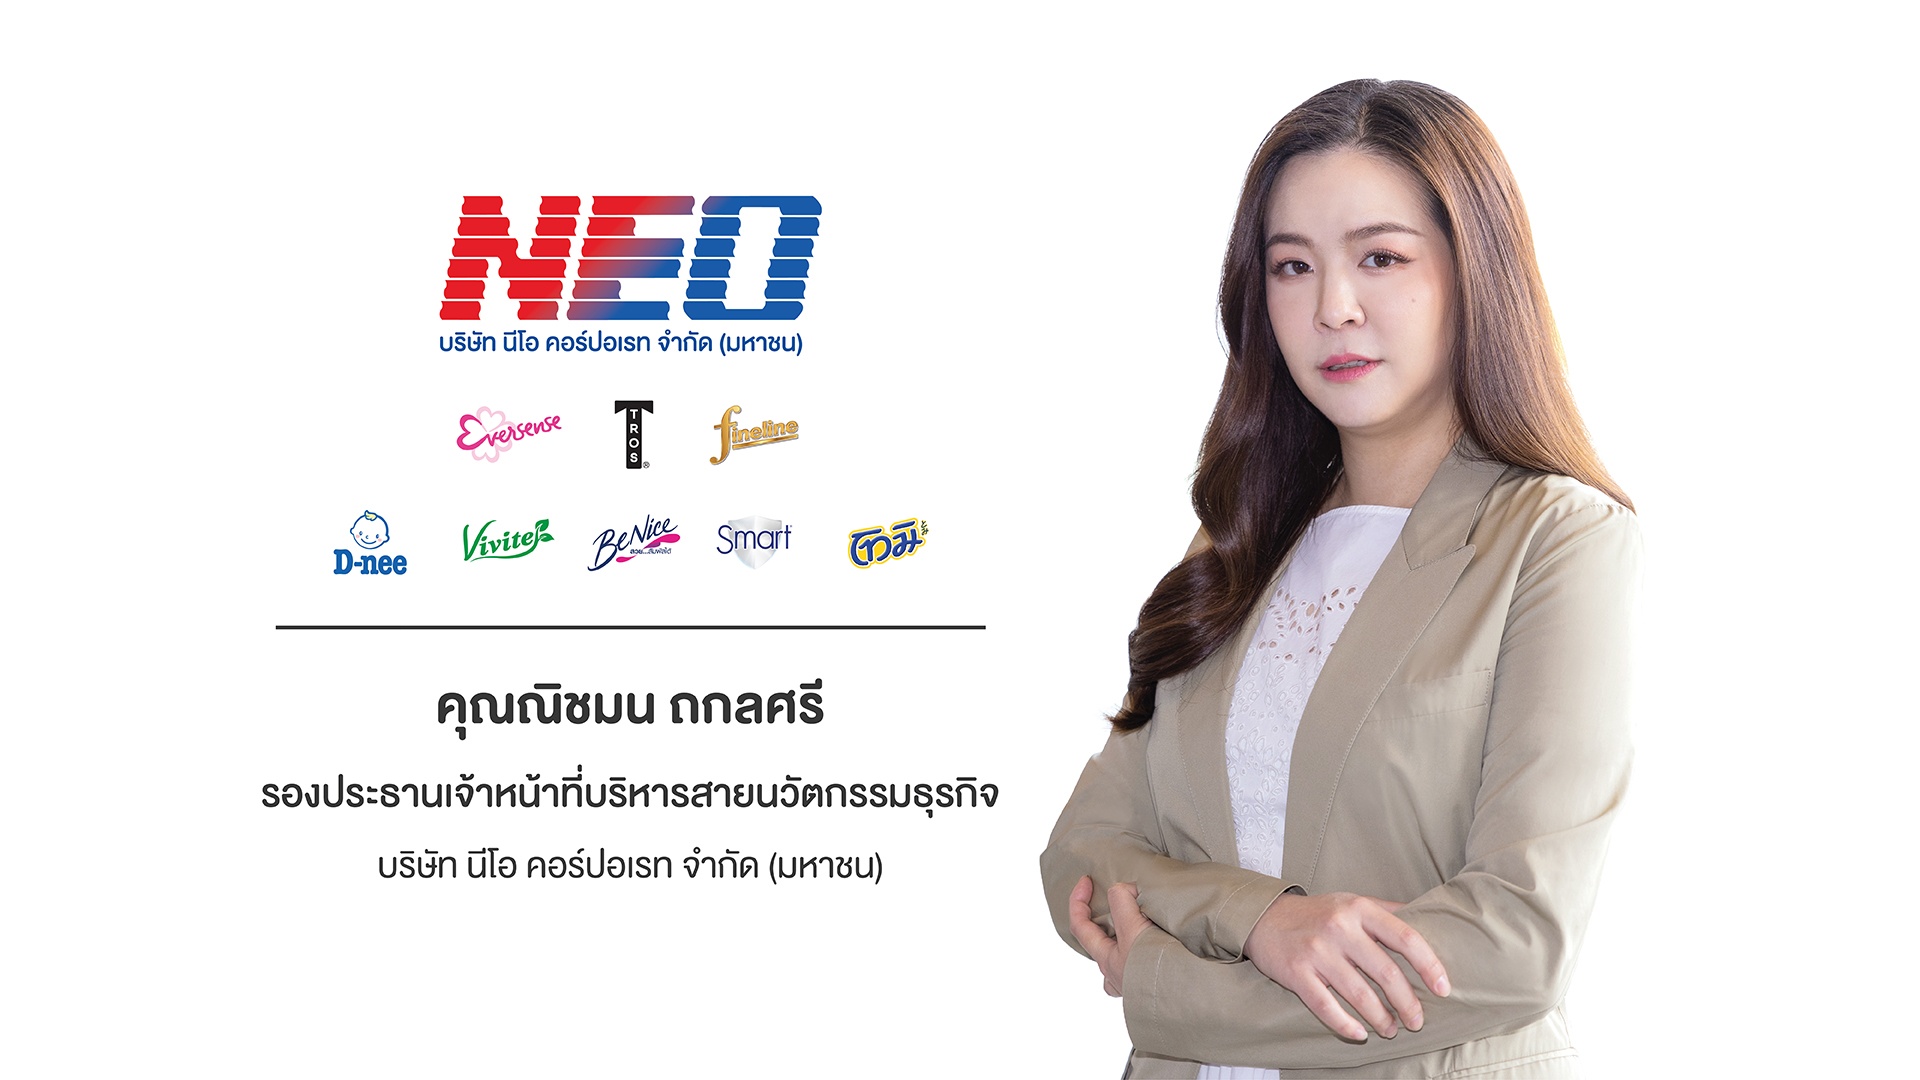 NEO รุกสร้าง New S Curve ตลาดสินค้าอุปโภค Silver Age ในประเทศไทย